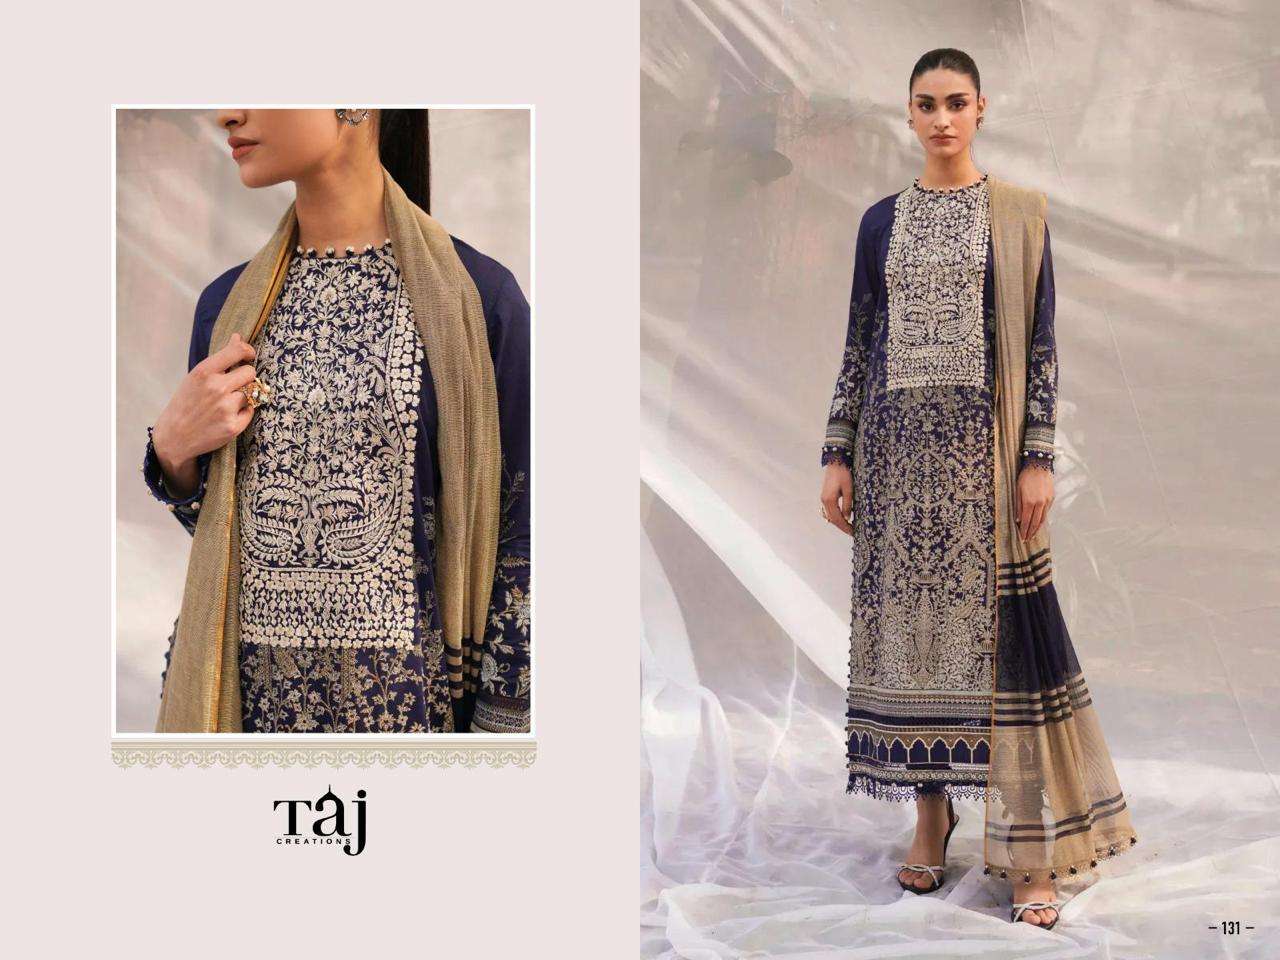 taj creations jade solitare latest designer wedding wear pakistani suit wholesaler surat gujarat